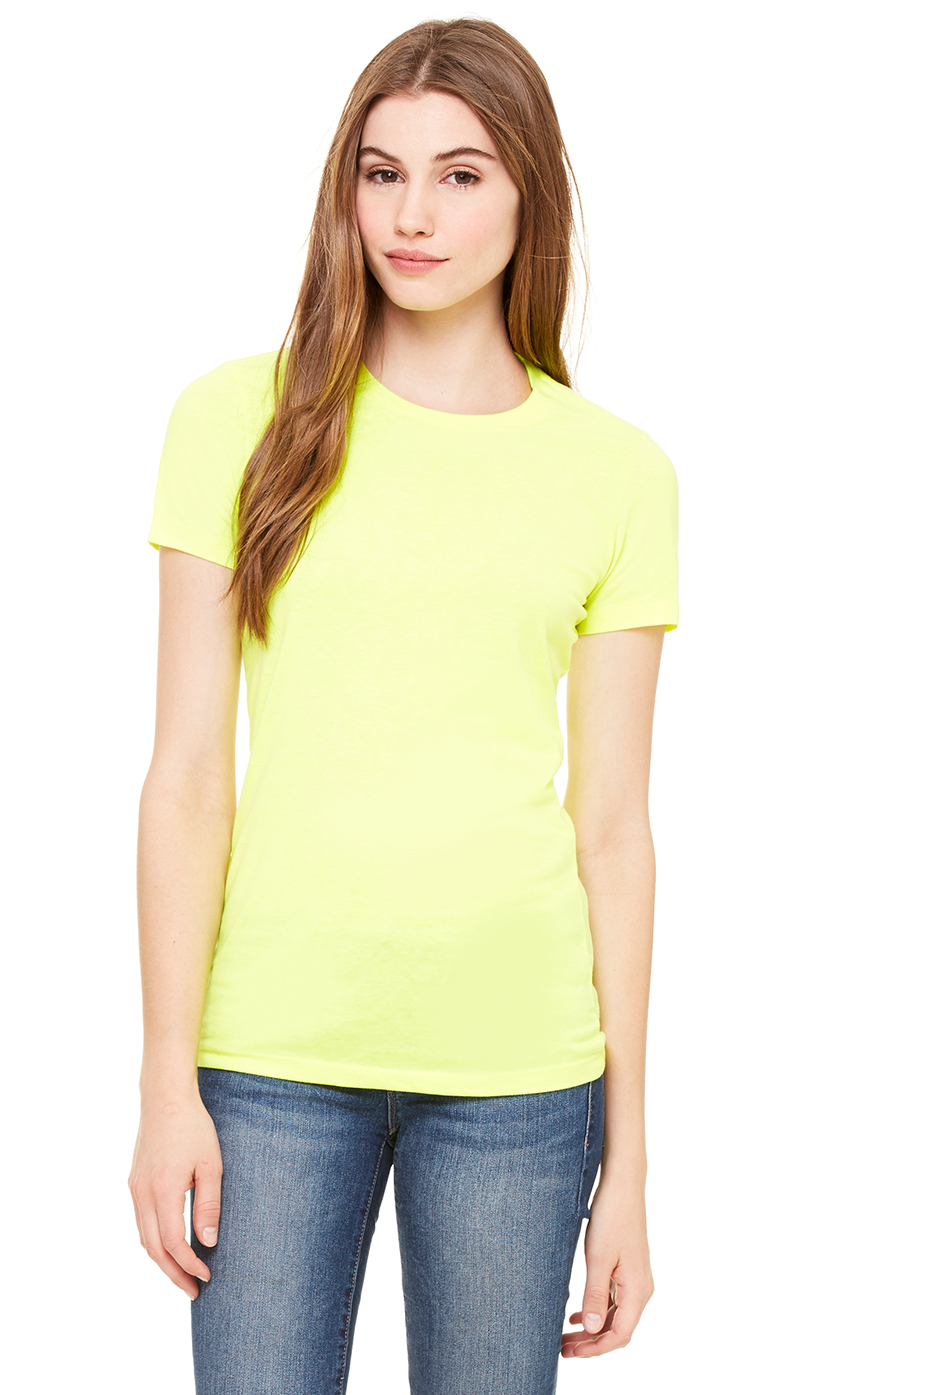 Womens Wholesale T Shirts | Poly Cotton Tee | Bulk, Plain Blank T ...